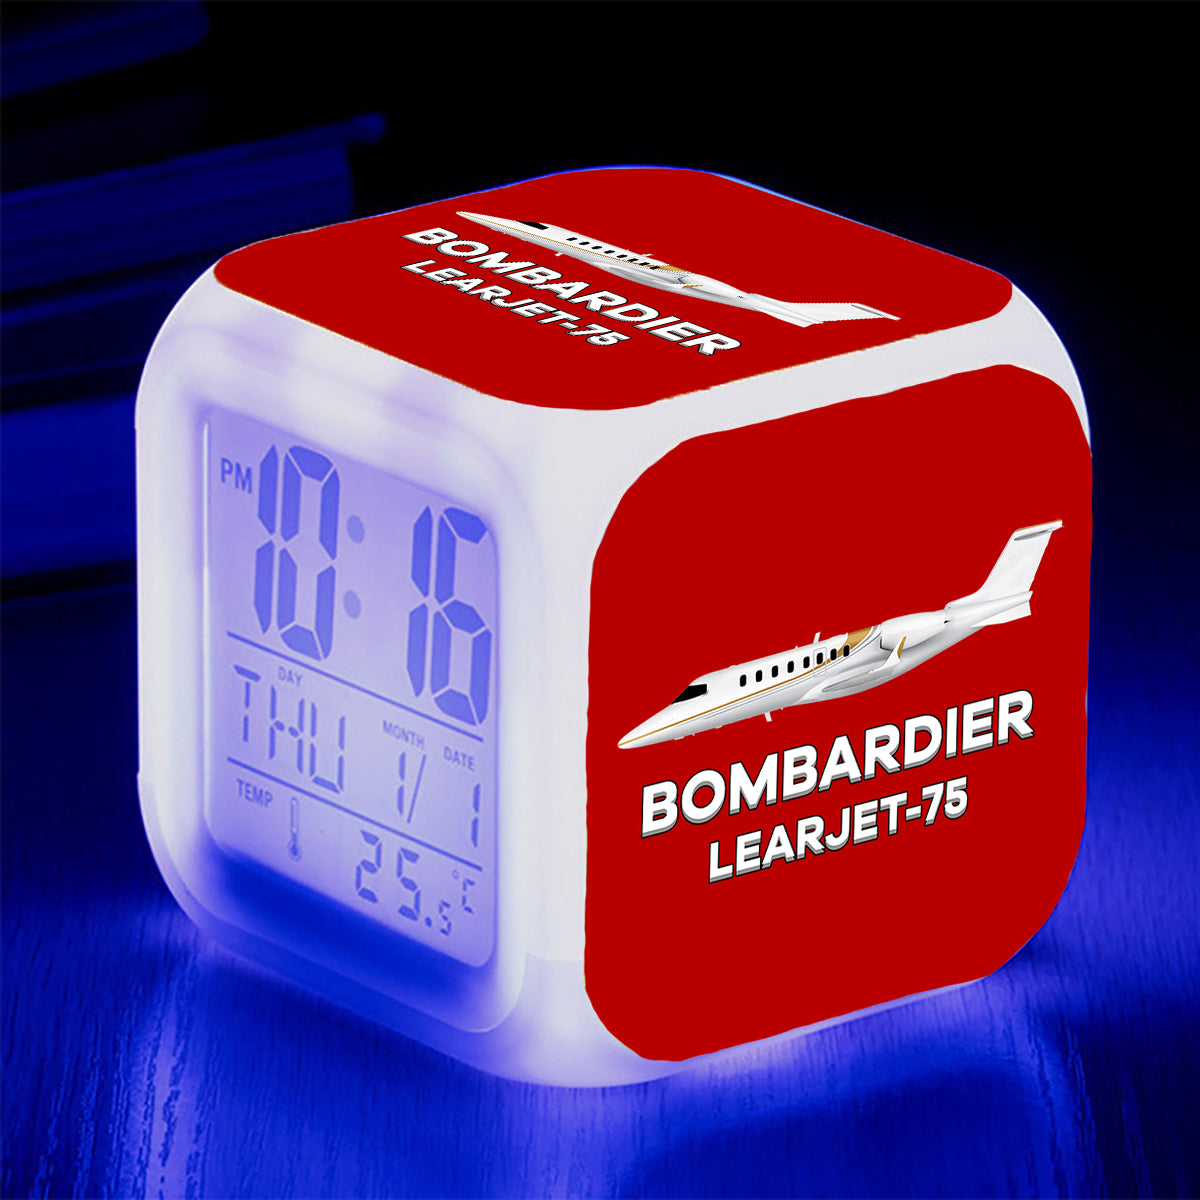 The Bombardier Learjet 75 Designed "7 Colour" Digital Alarm Clock